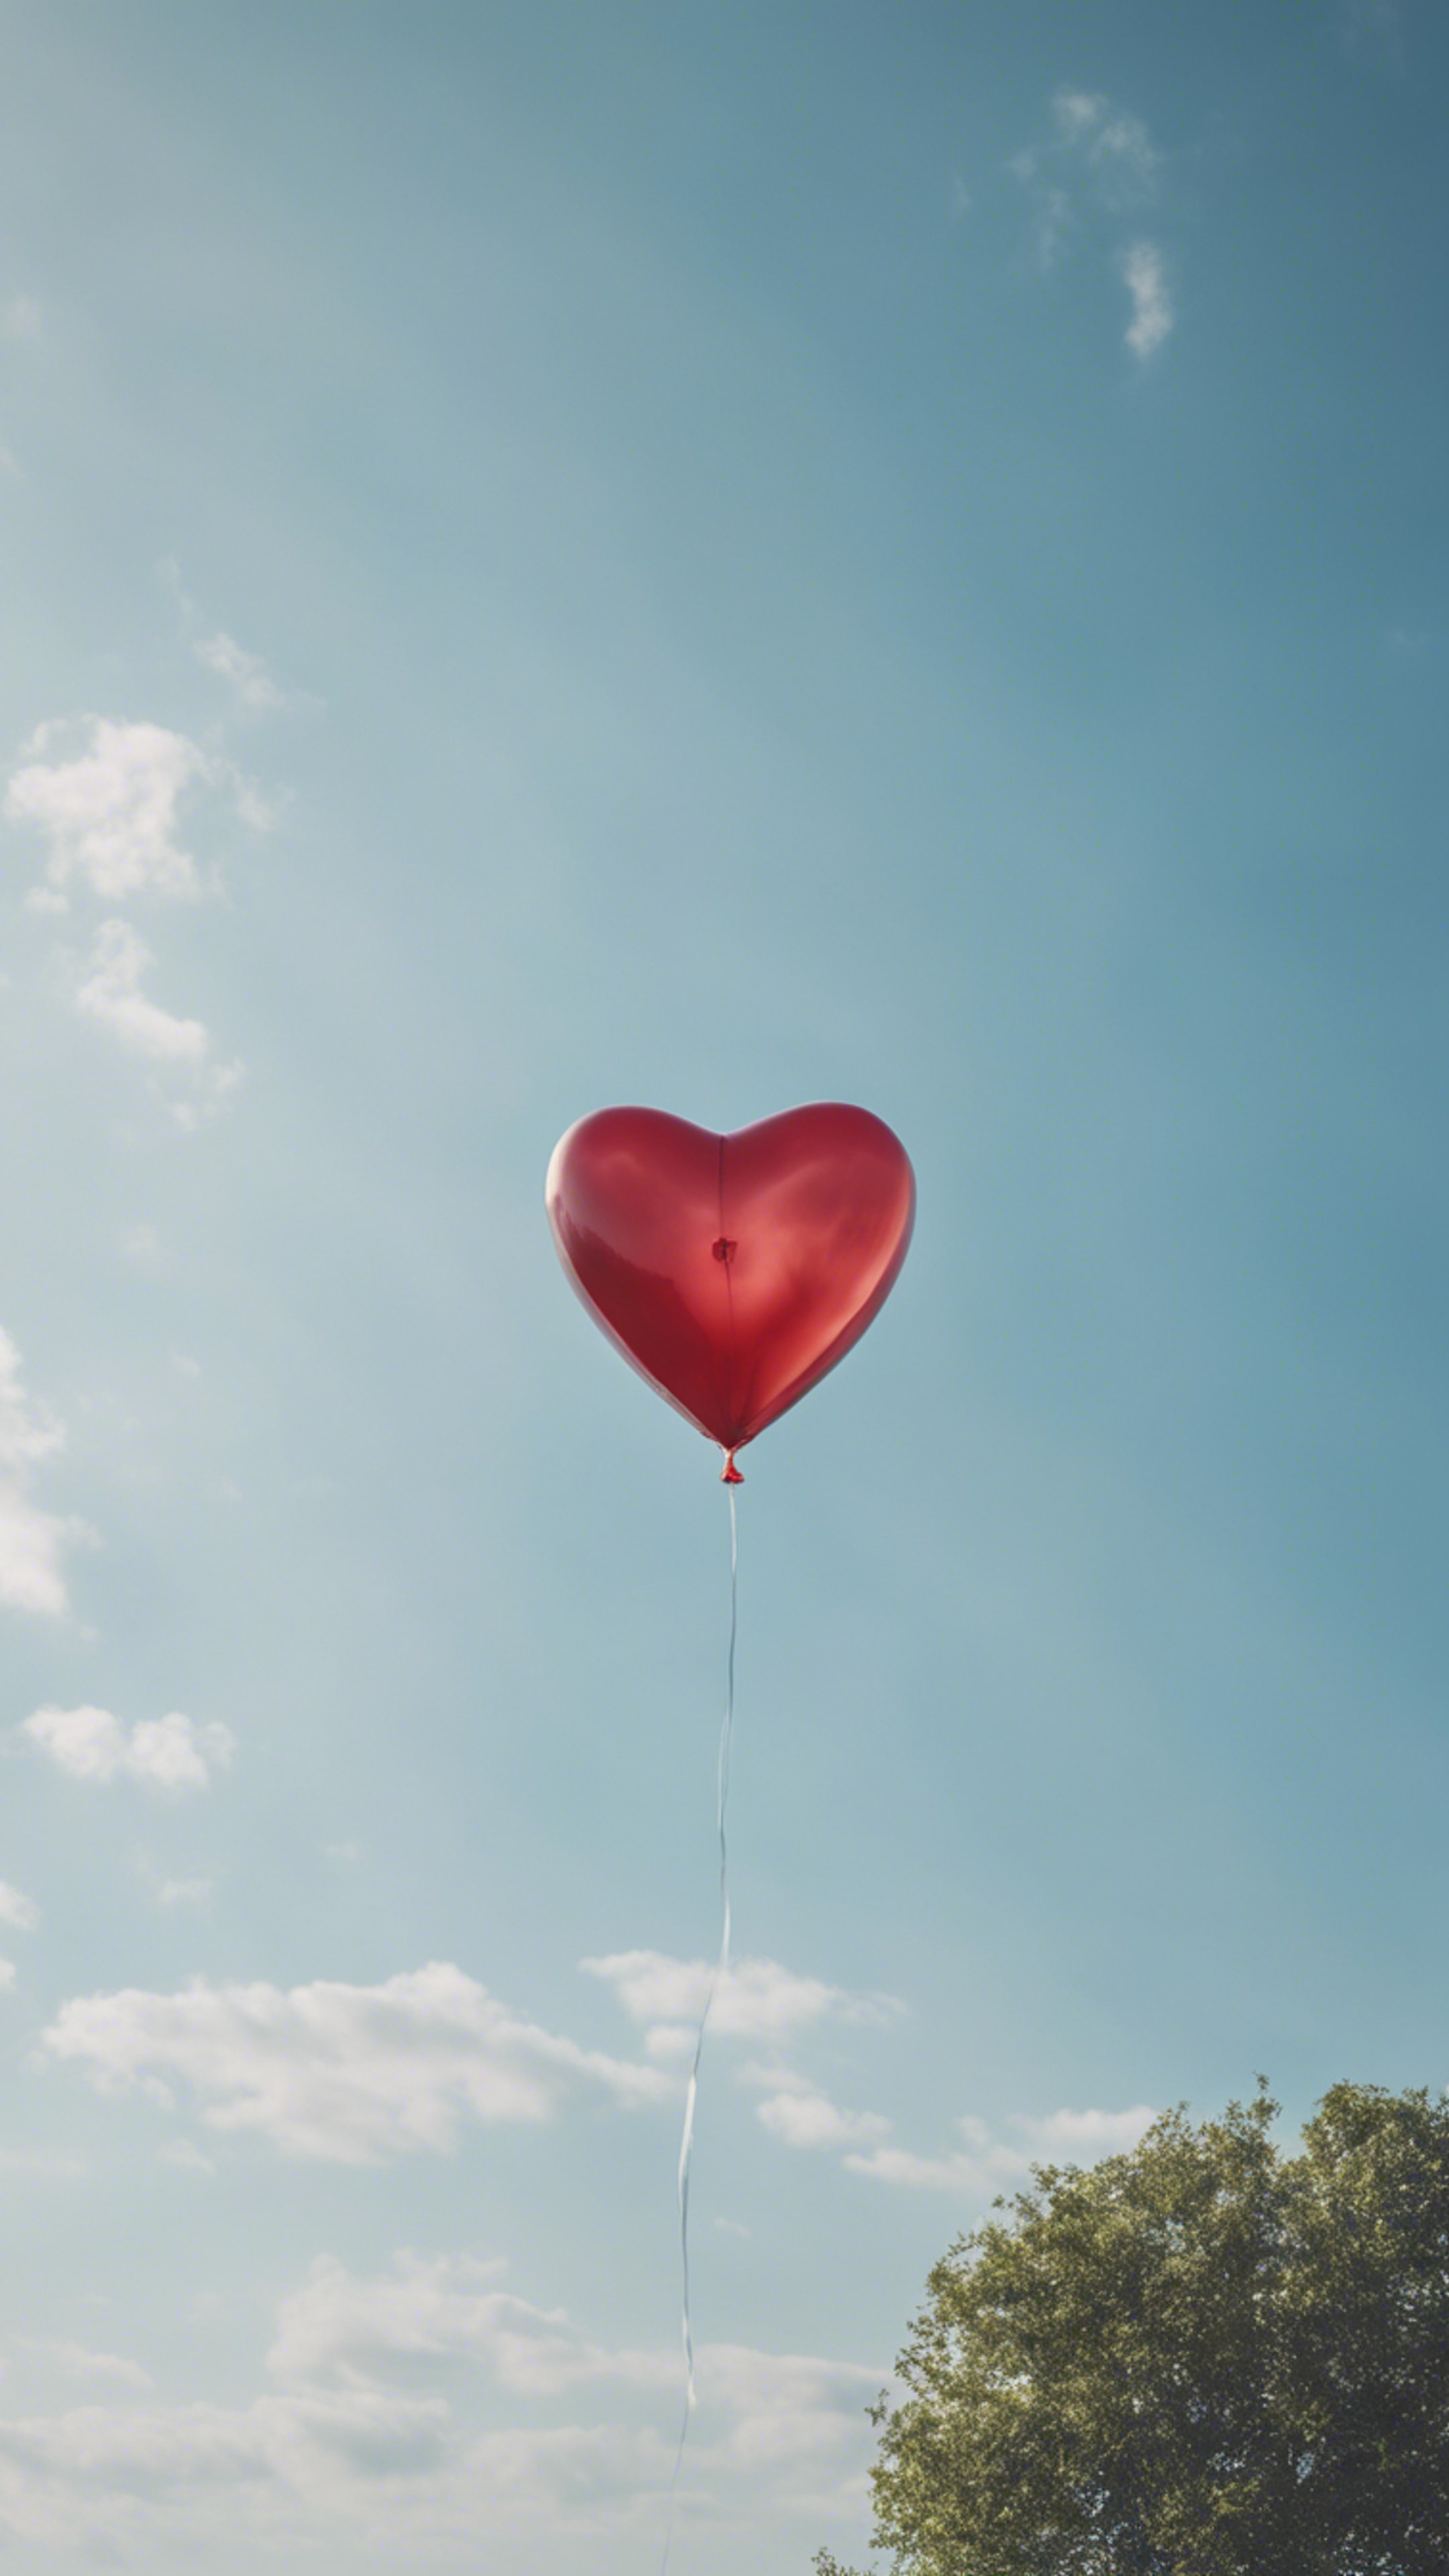 A heart-shaped balloon floating against a clear blue sky. Обои[a9514e42219e409599c0]